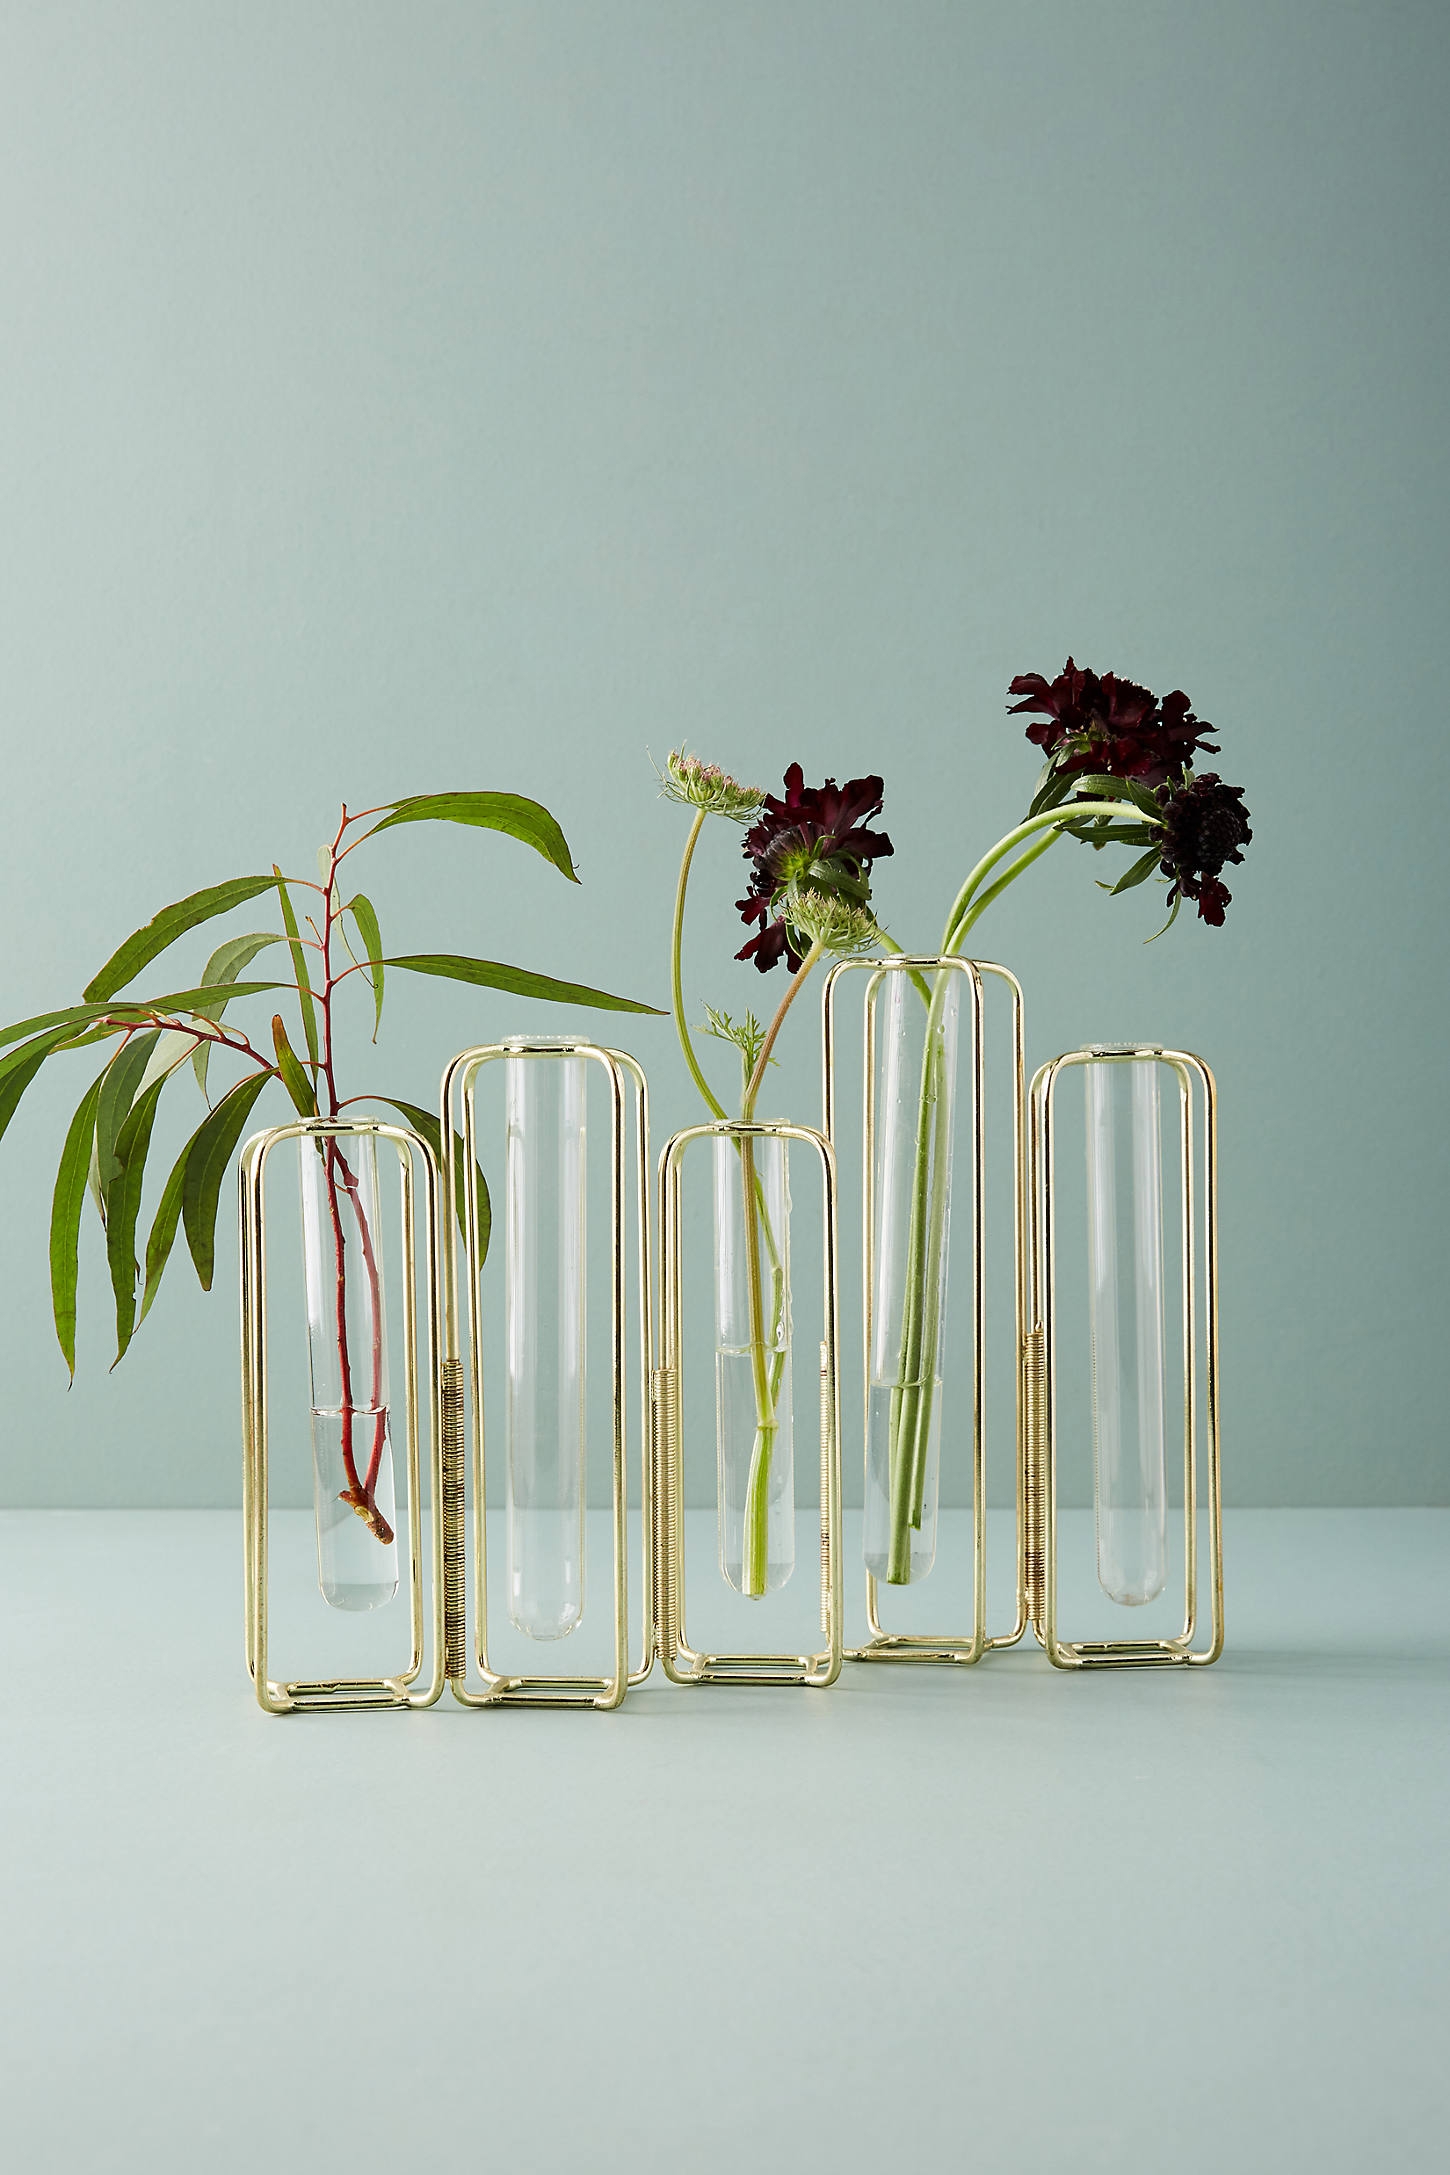 Staggered Vase - Image 0